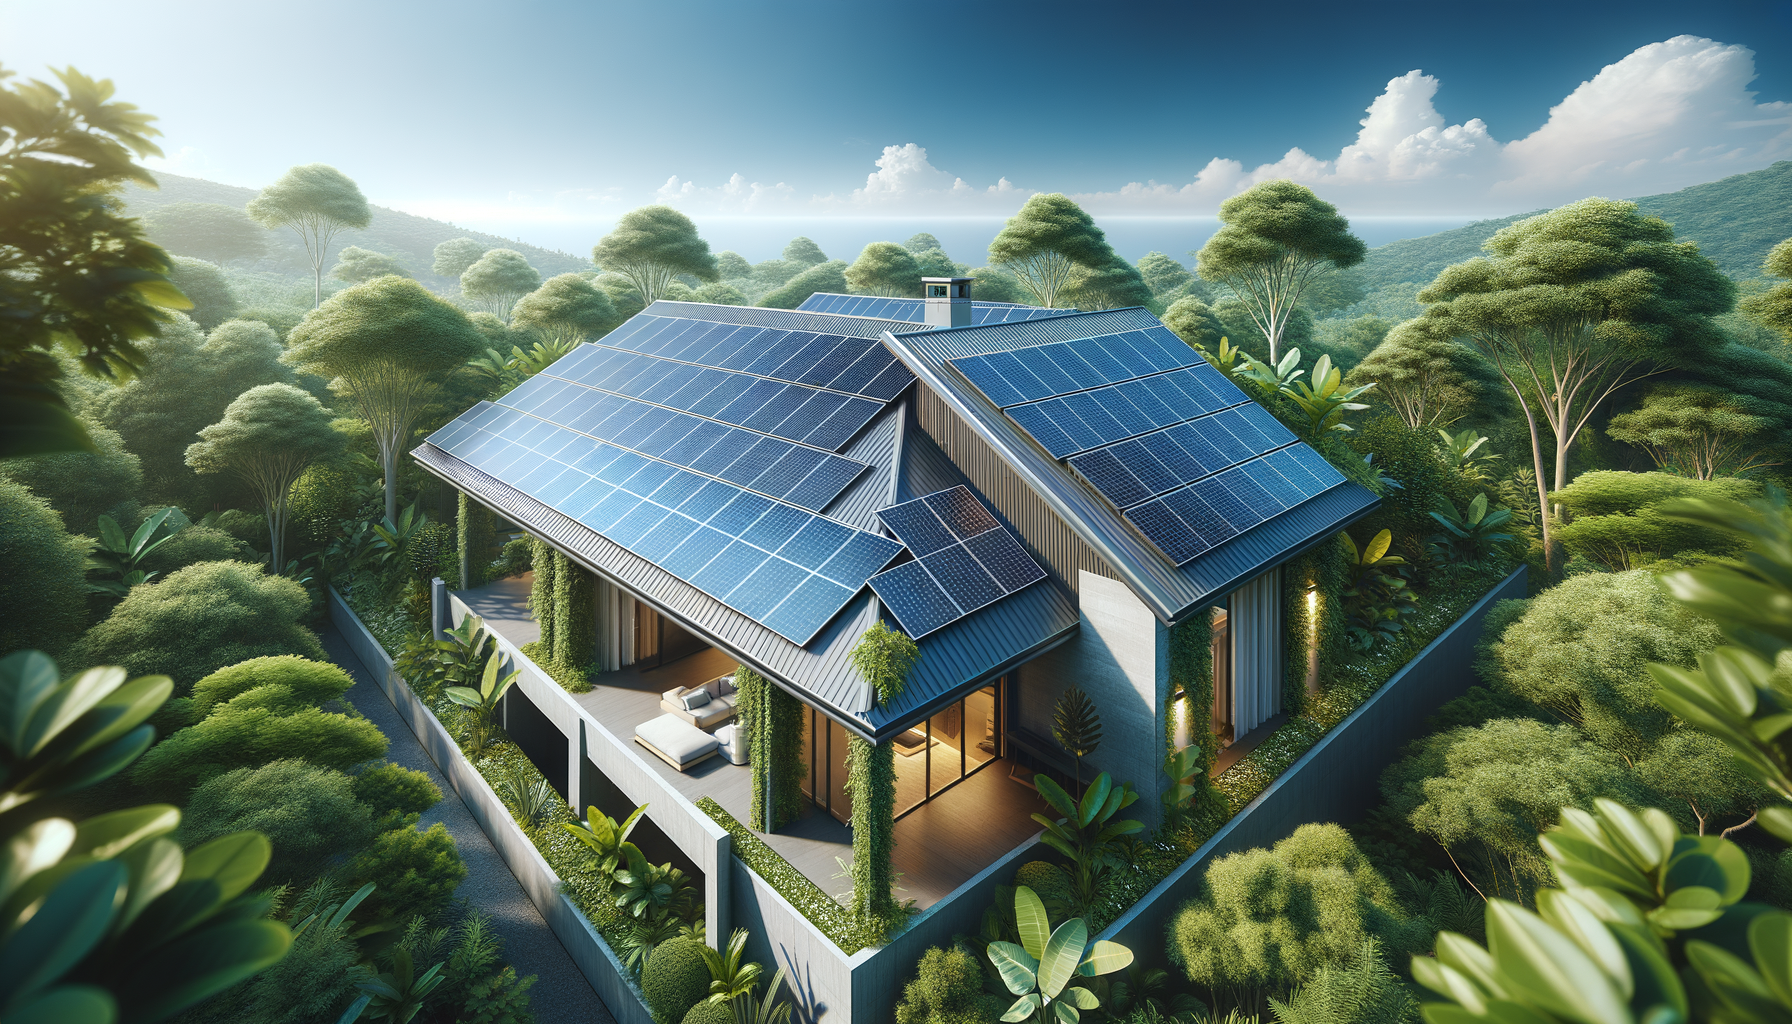 ALT: Solar panels on a residential roof